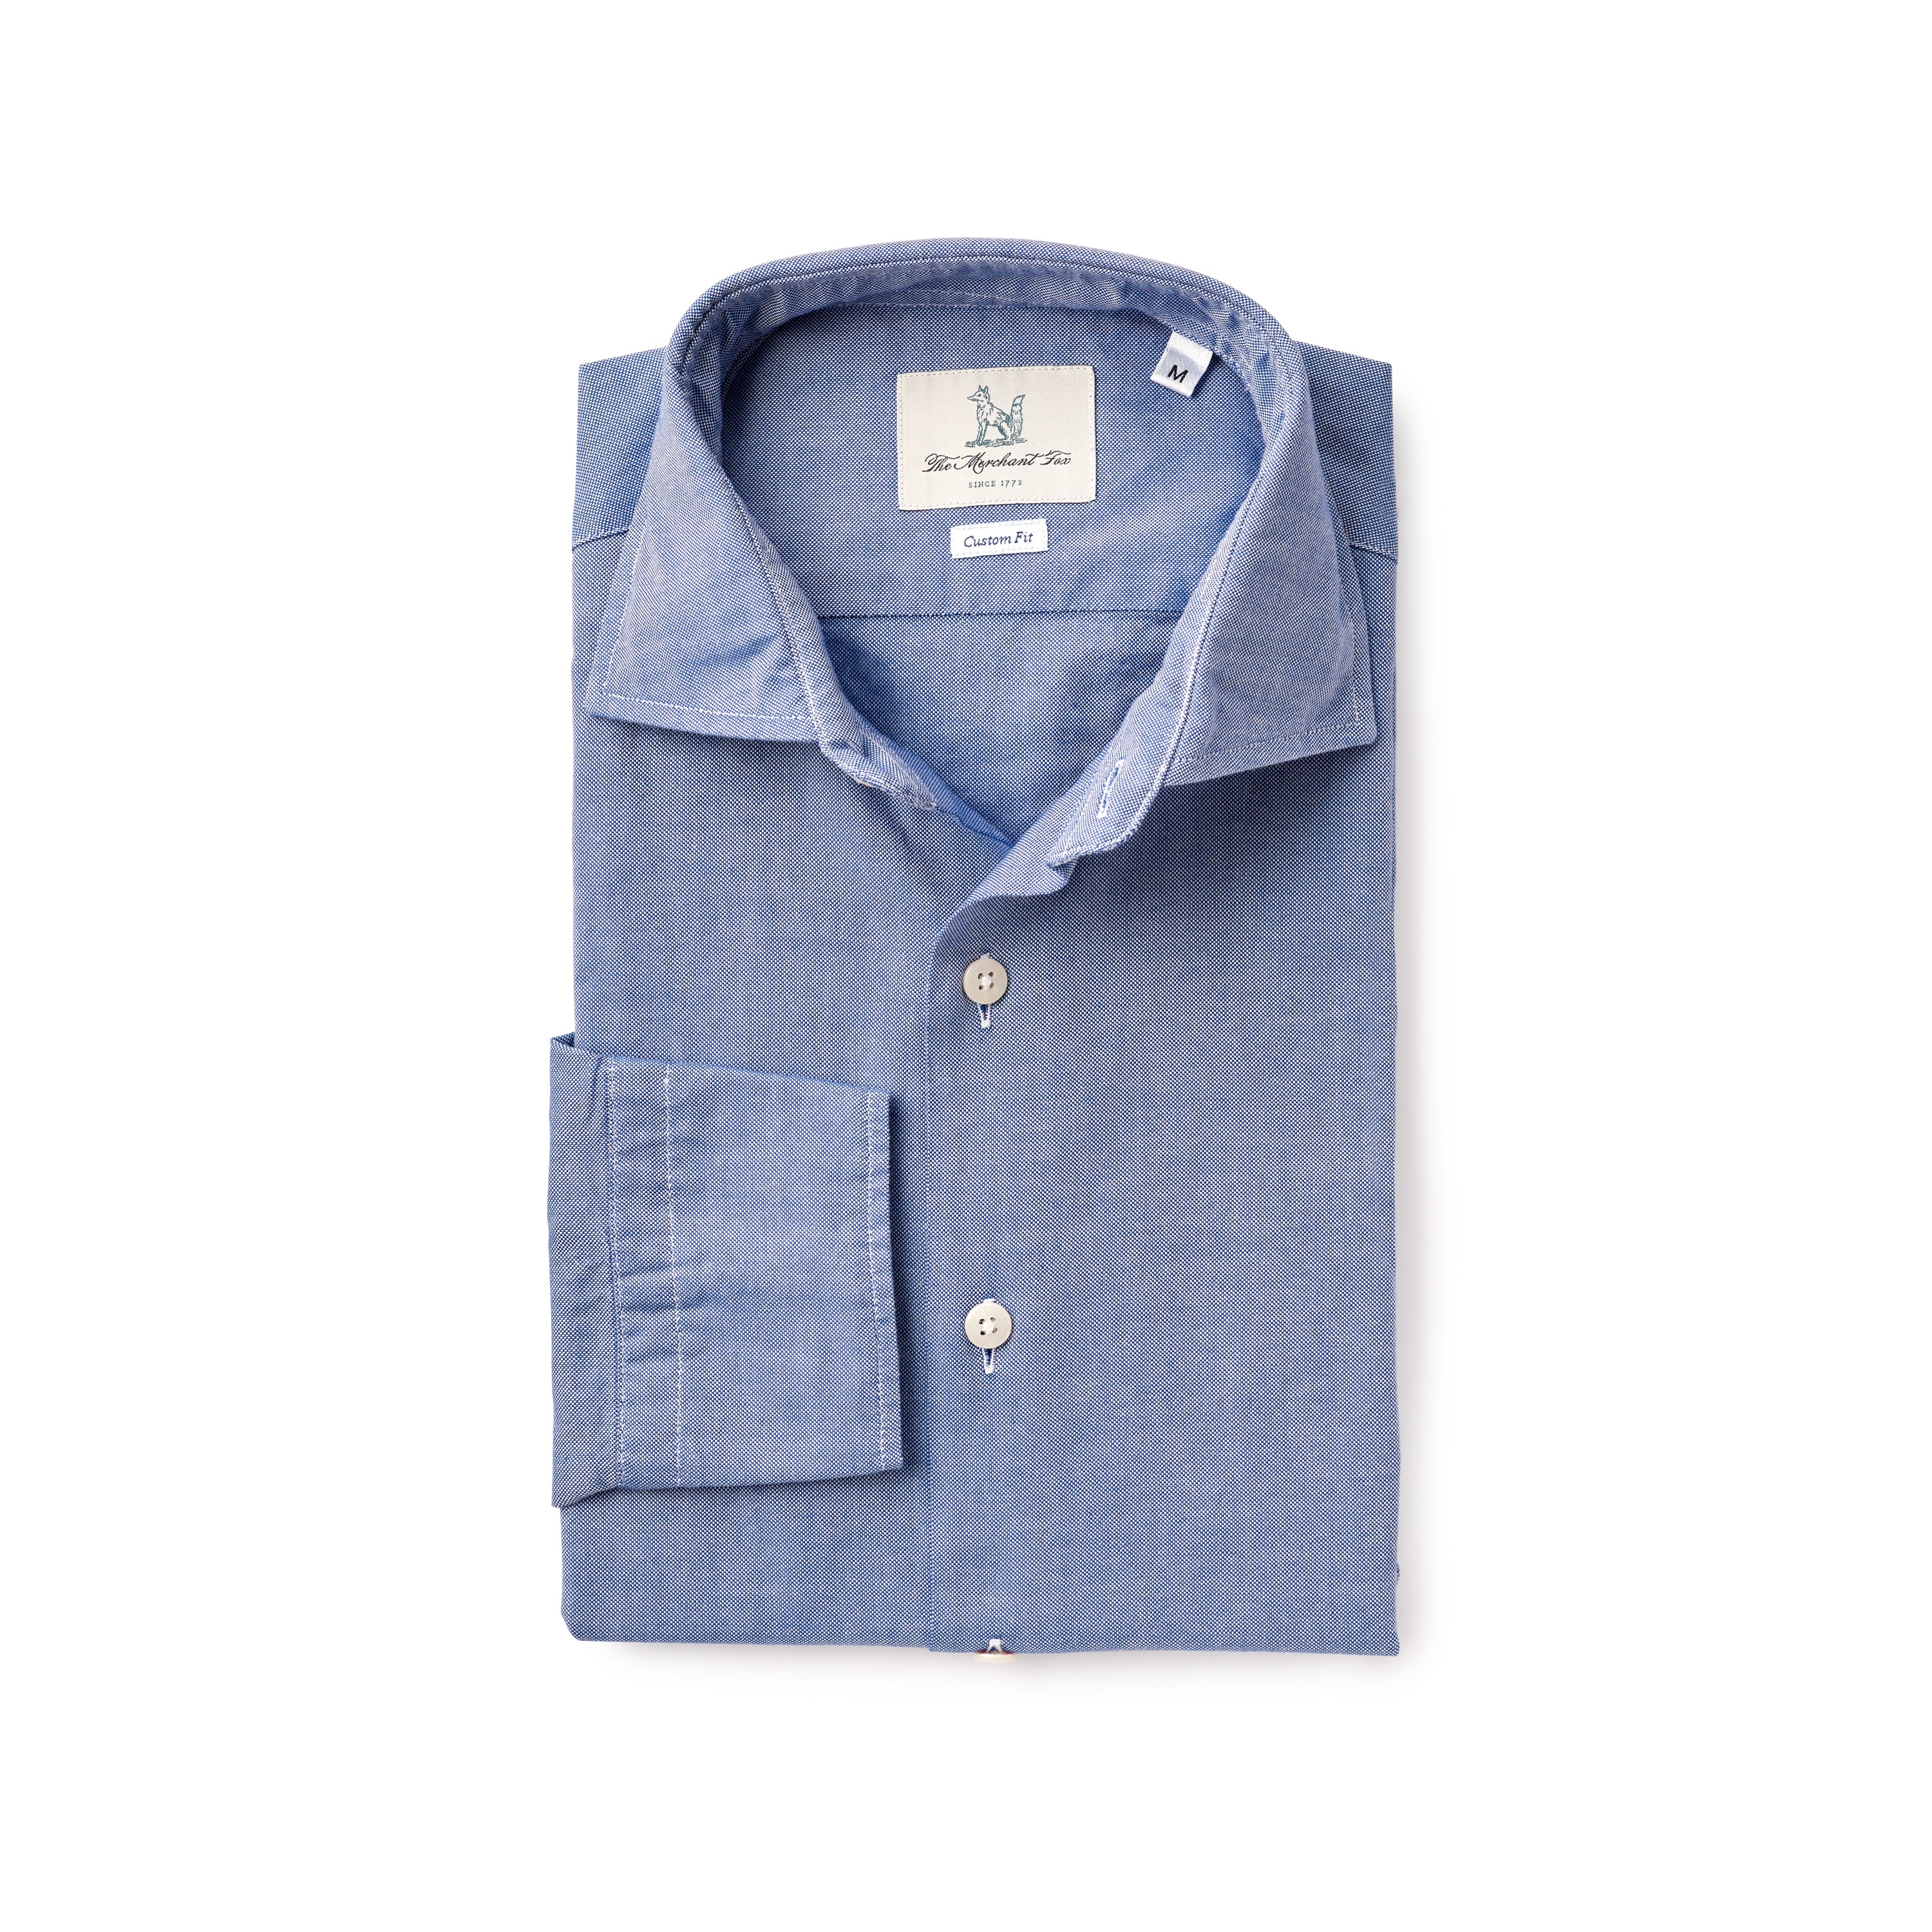 Mid-blue spread collar oxford shirt